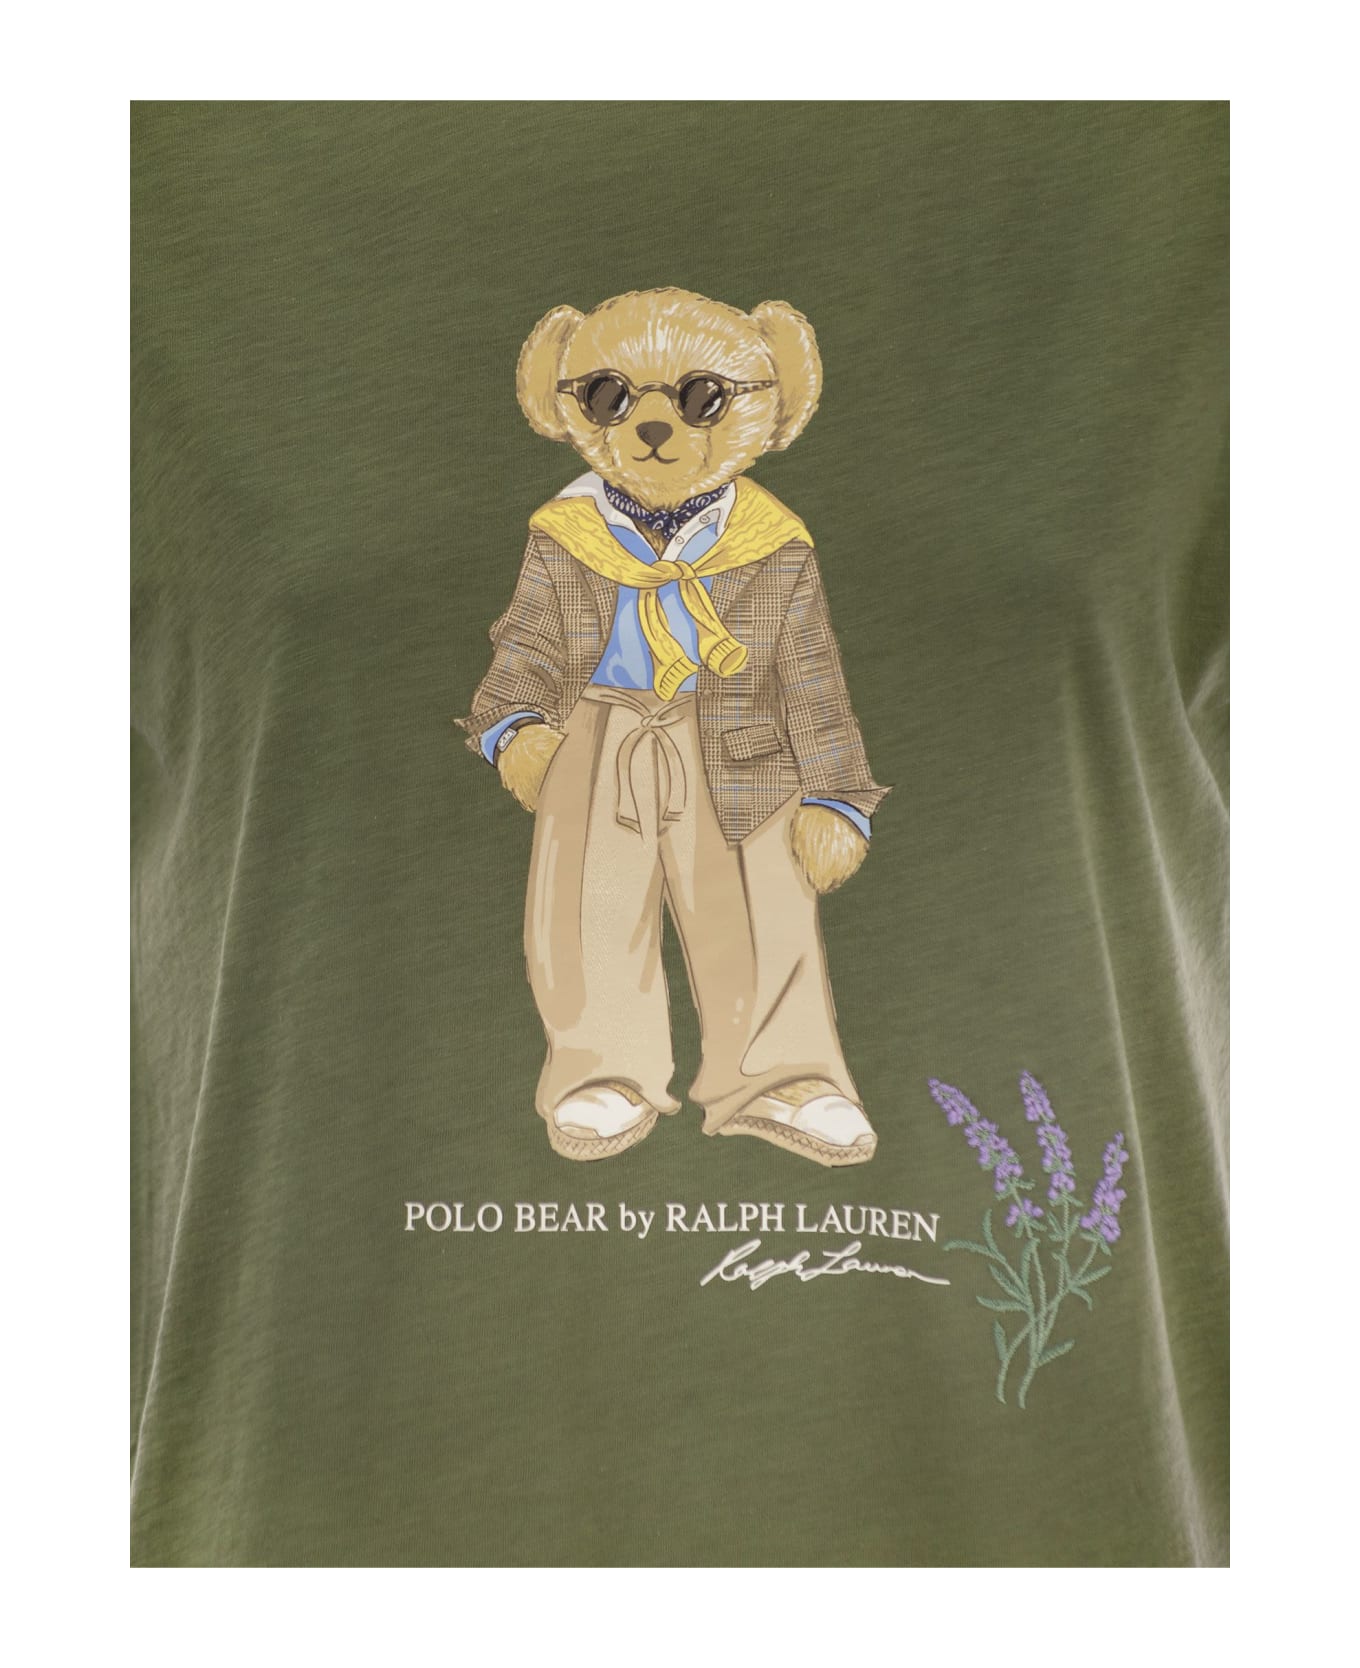 Polo Ralph Lauren Printed Cotton T-shirt - green Tシャツ